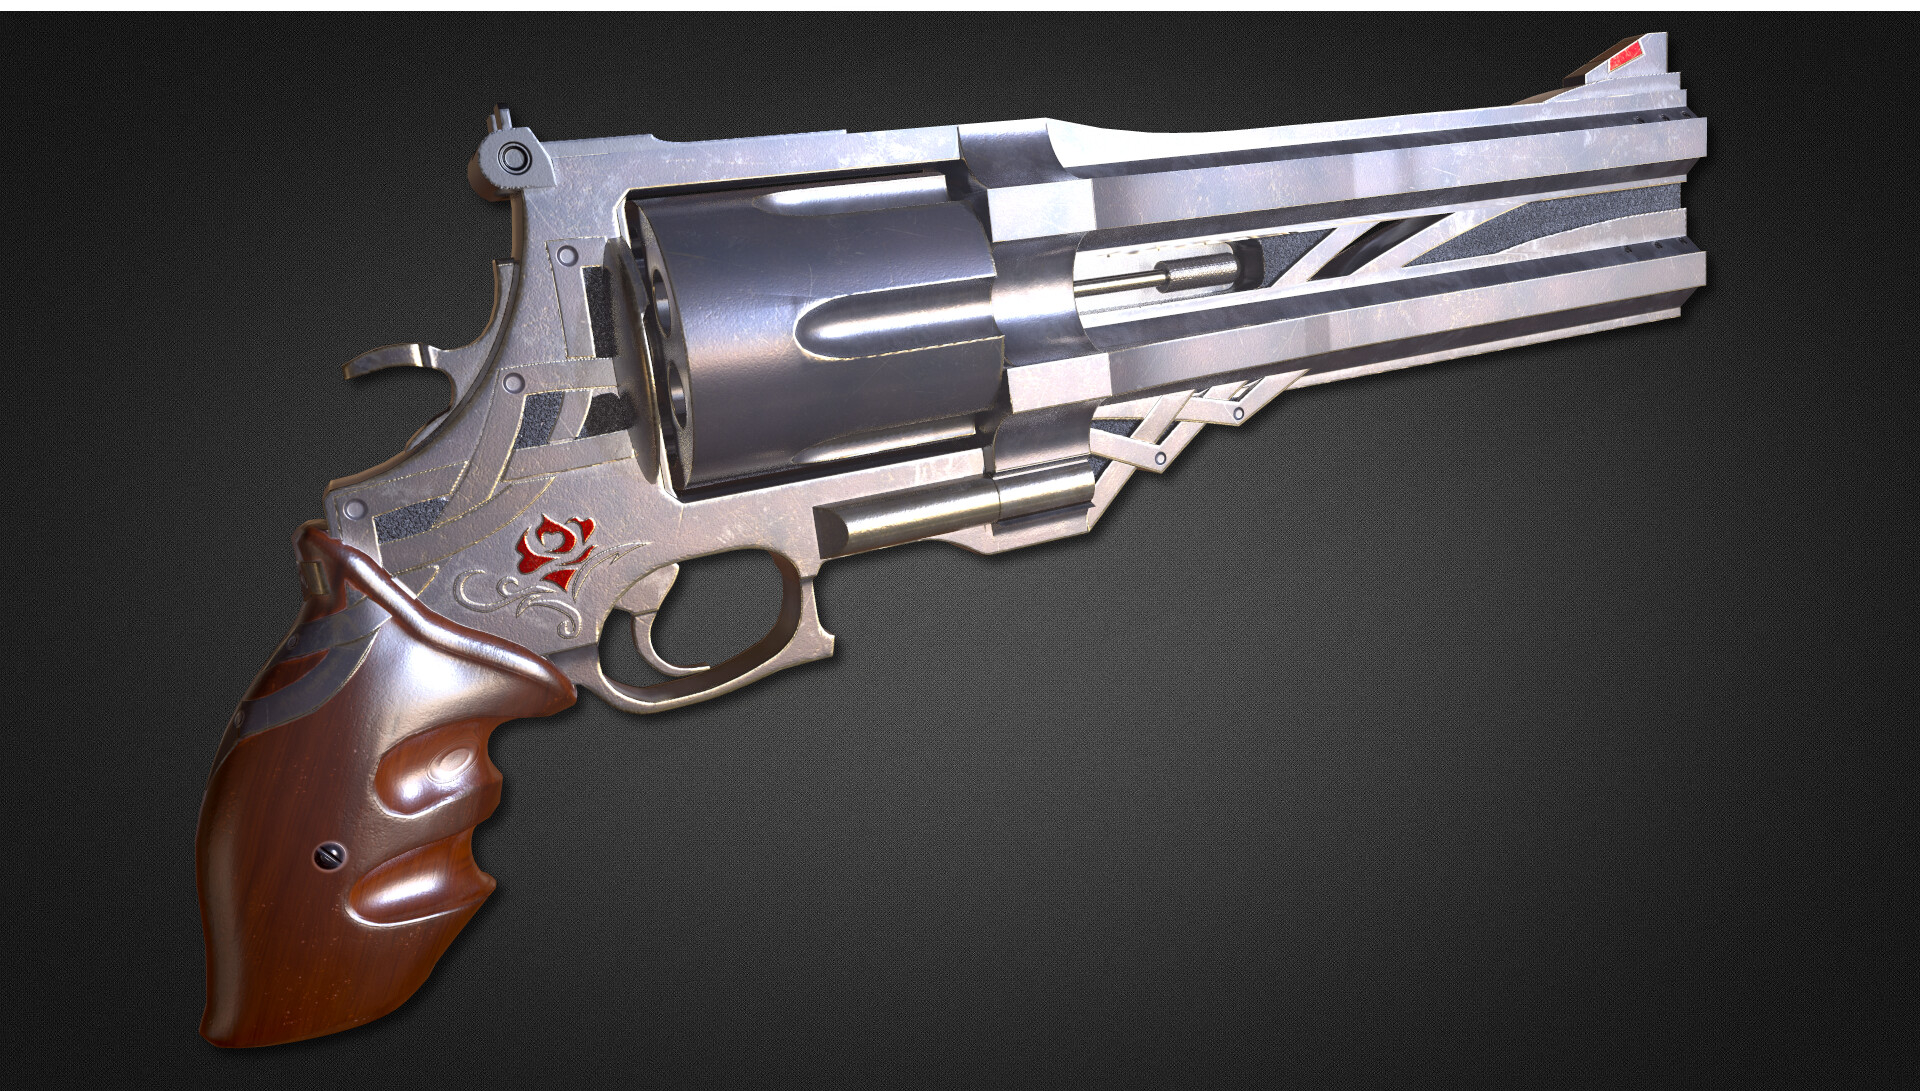 blue rose revolver